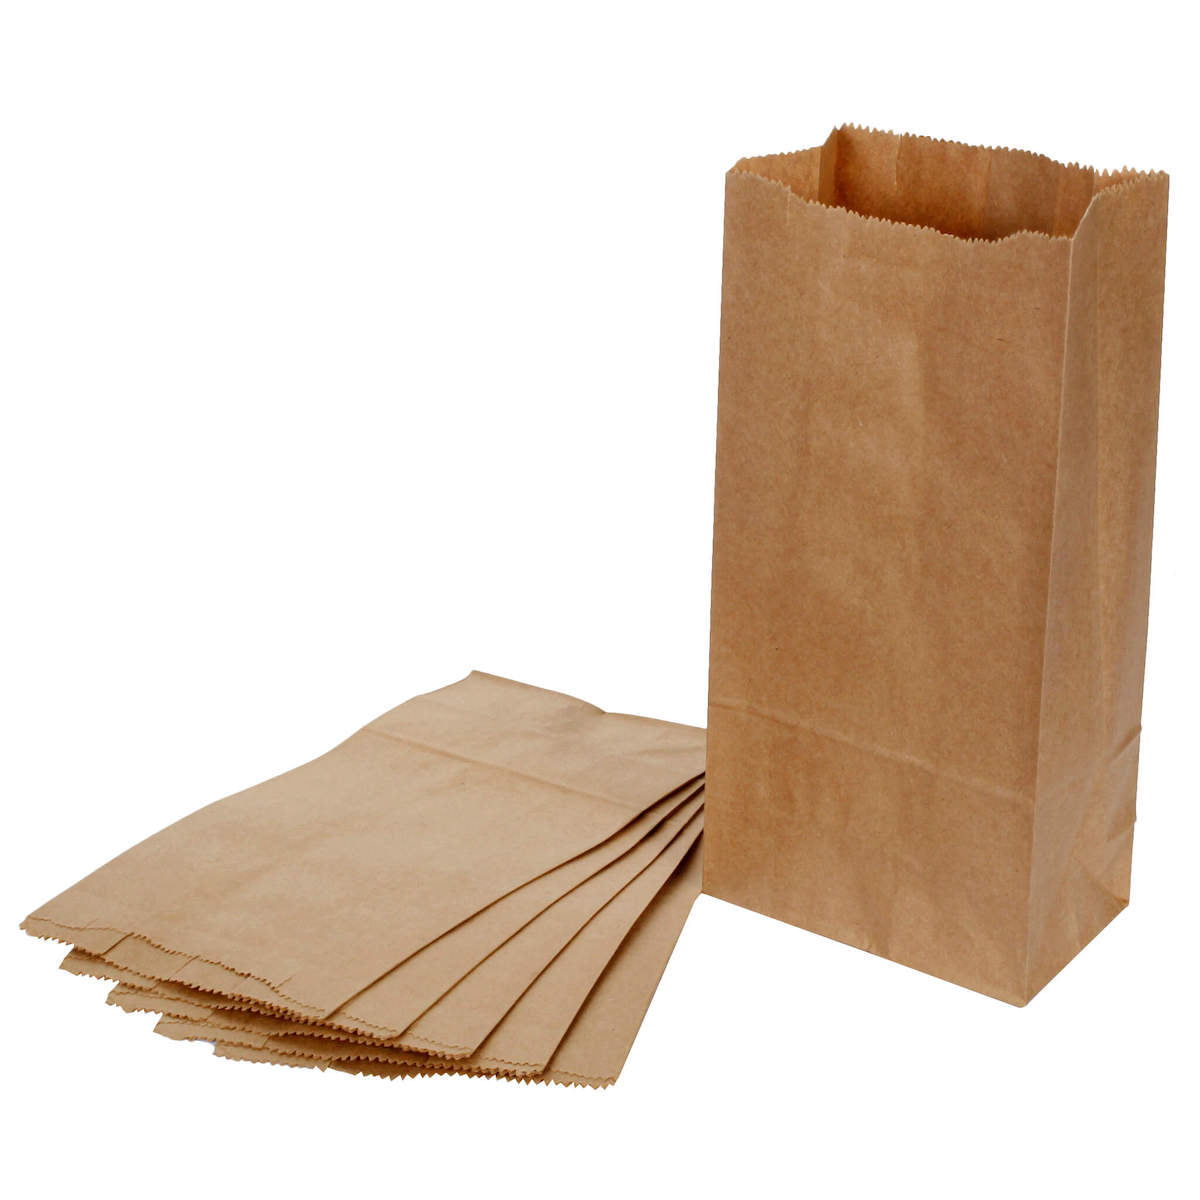 Como hacer bolsas de papel para regalo. Manualidades fáciles